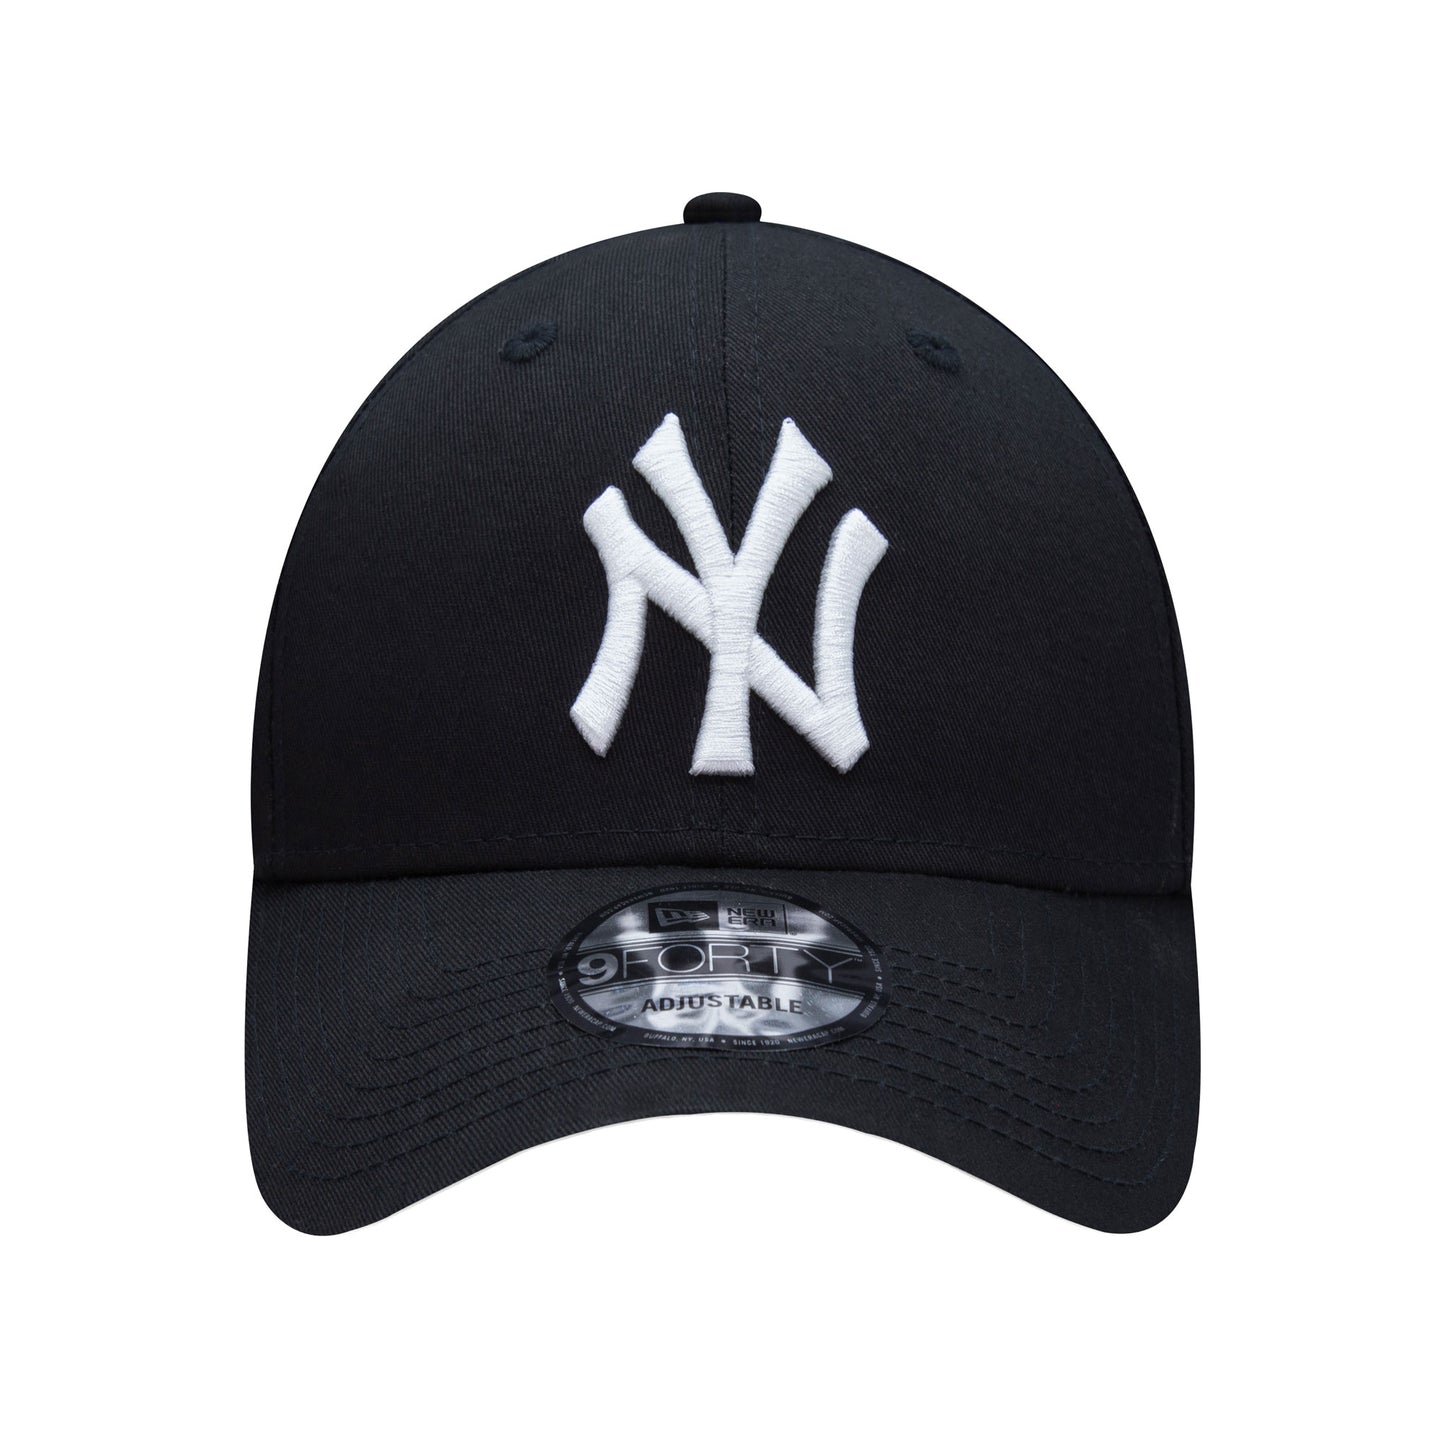 New York Yankees 9FORTY New Era Cap blk wht